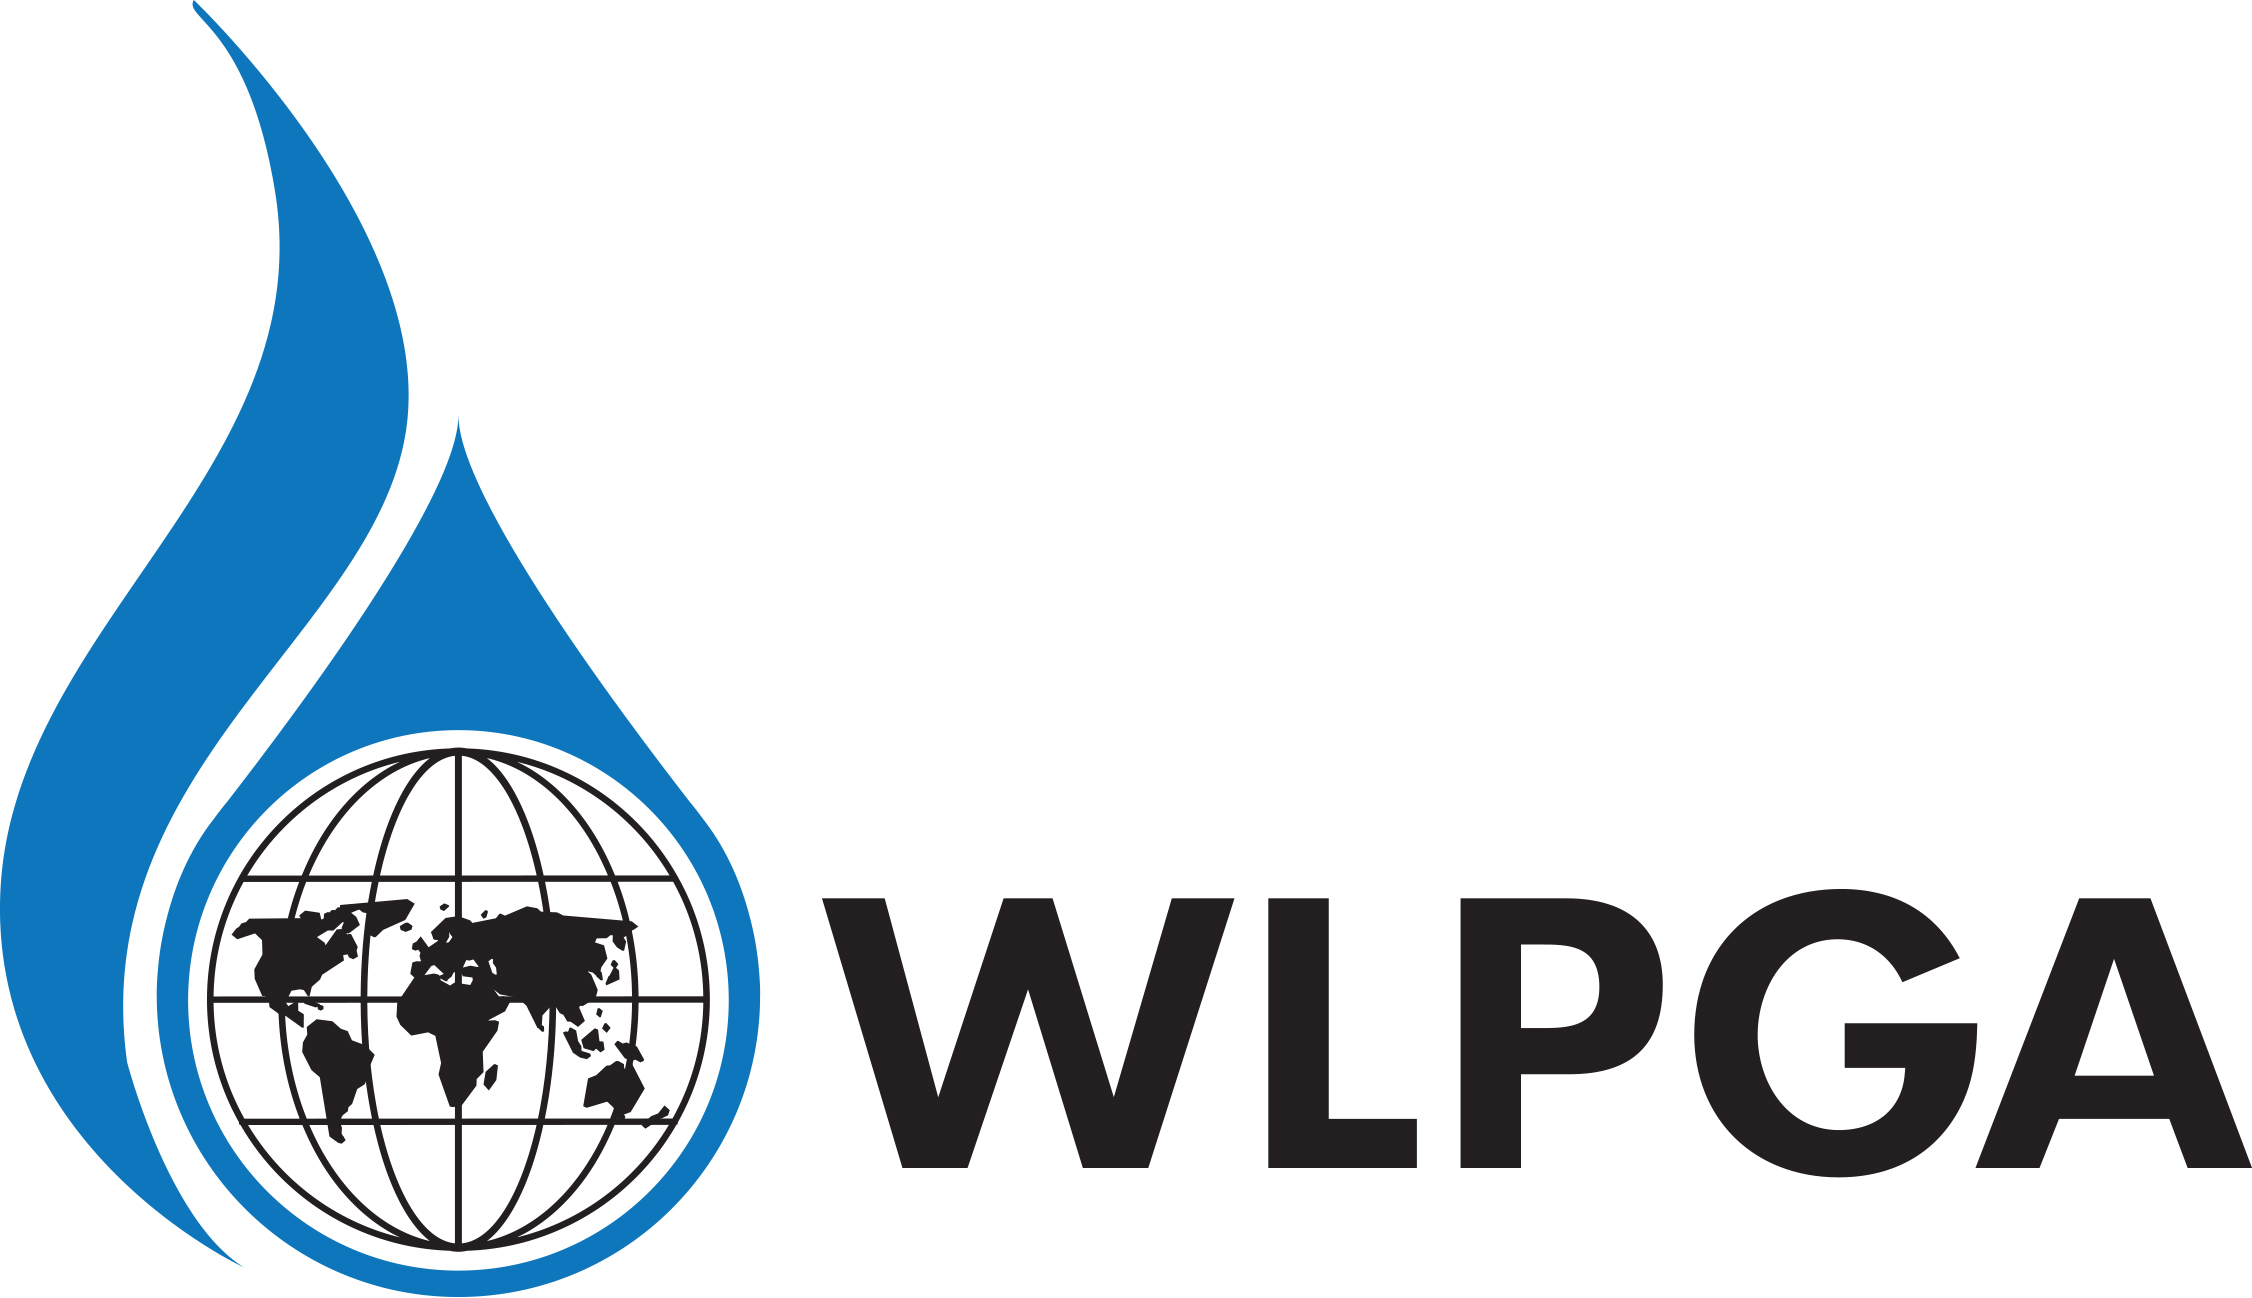 A--WLPGA-logo.jpg